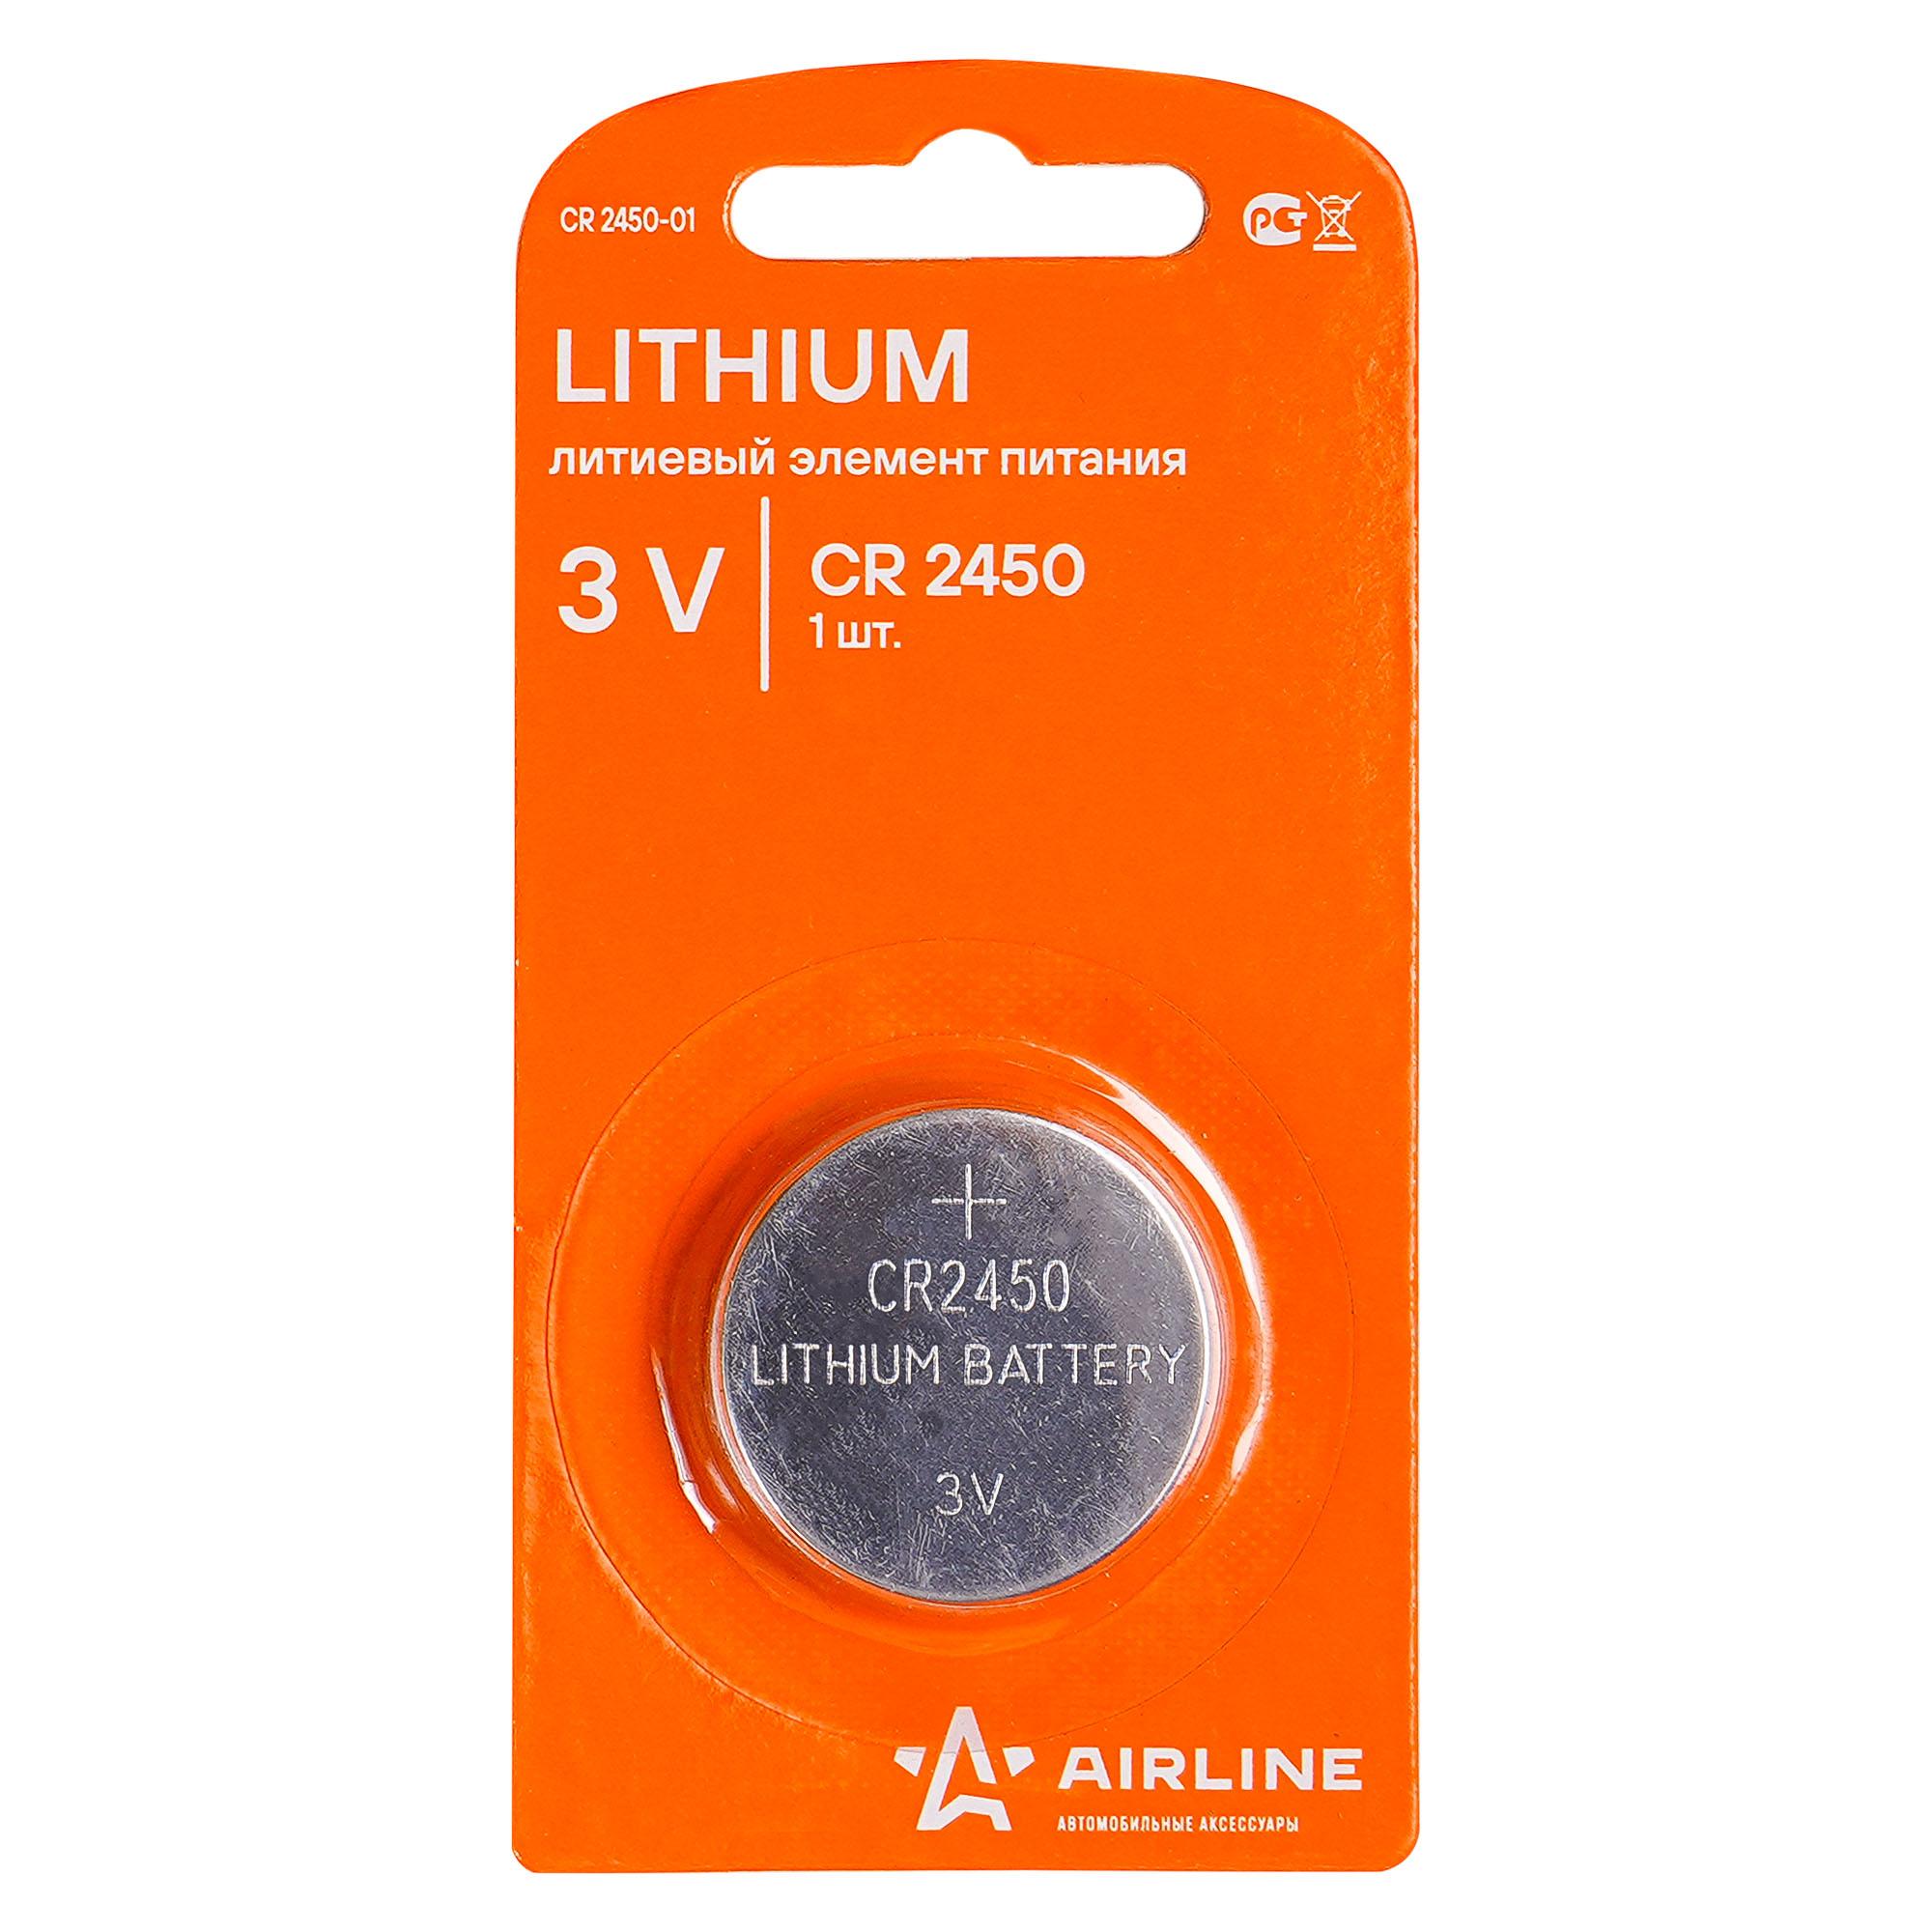 AIRLINE CR245001 Батарейка CR2450 3V для брелоков сигнализаций литиевая 1 шт. (CR2450-01) airline cr161601 батарейка cr1616 3v для брелоков сигнализаций литиевая 1 шт cr1616 01